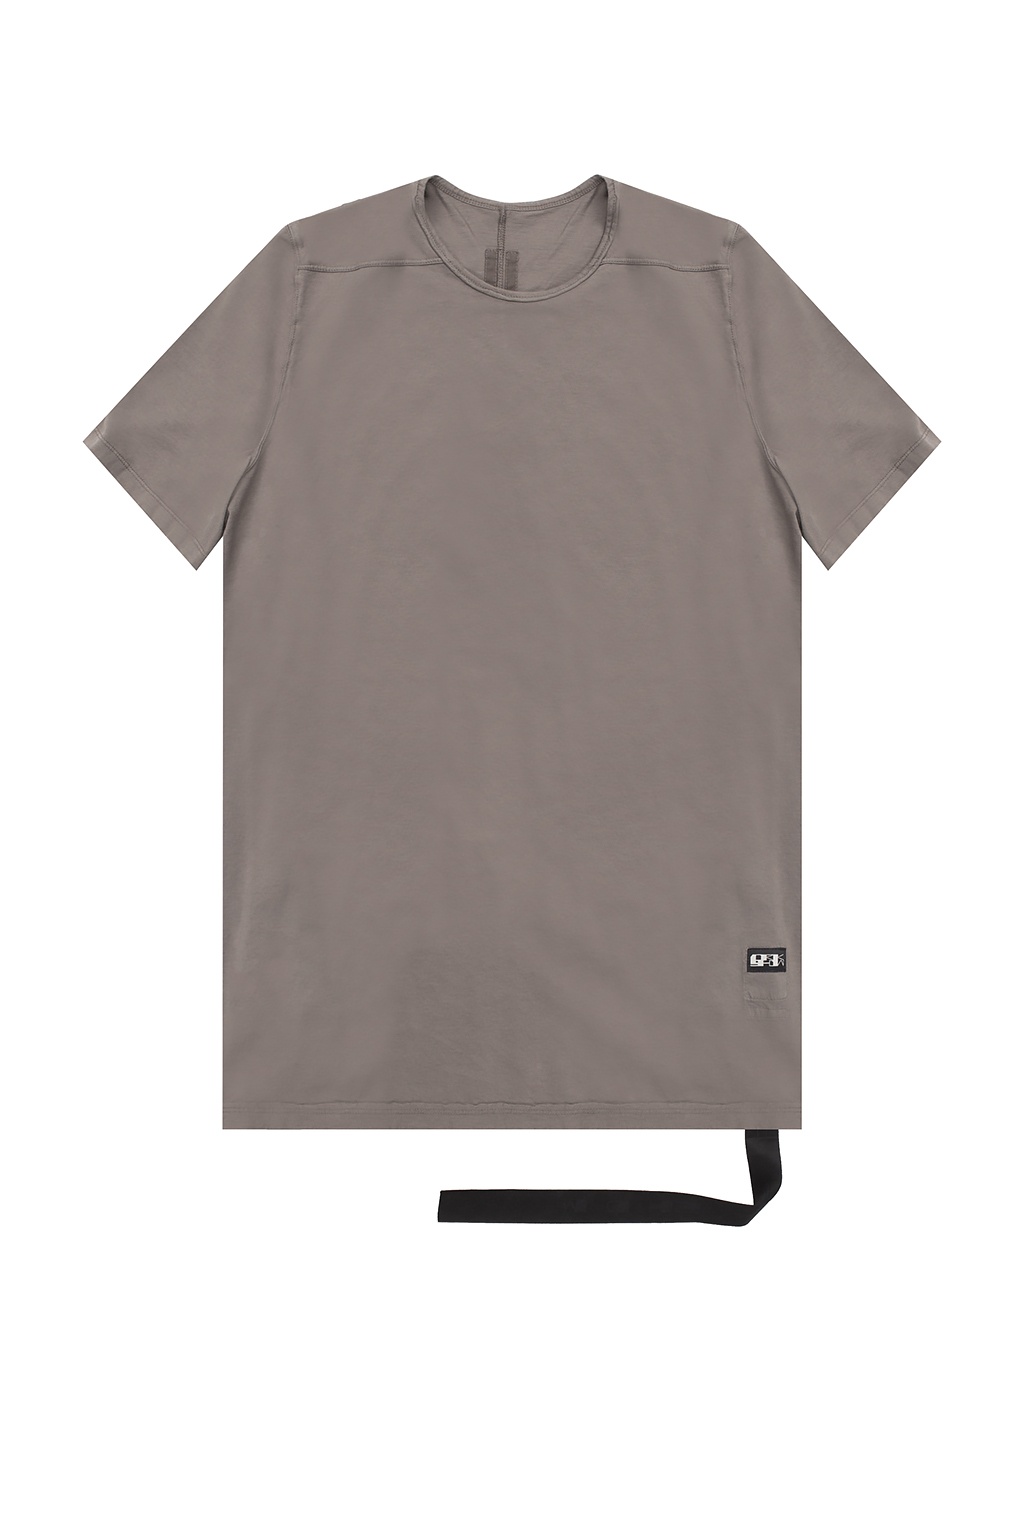 Grey Oversize T - Extension-fmedShops Spain - shirt Rick Owens DRKSHDW -  adidas Gaming Graphic T-Shirt Kids